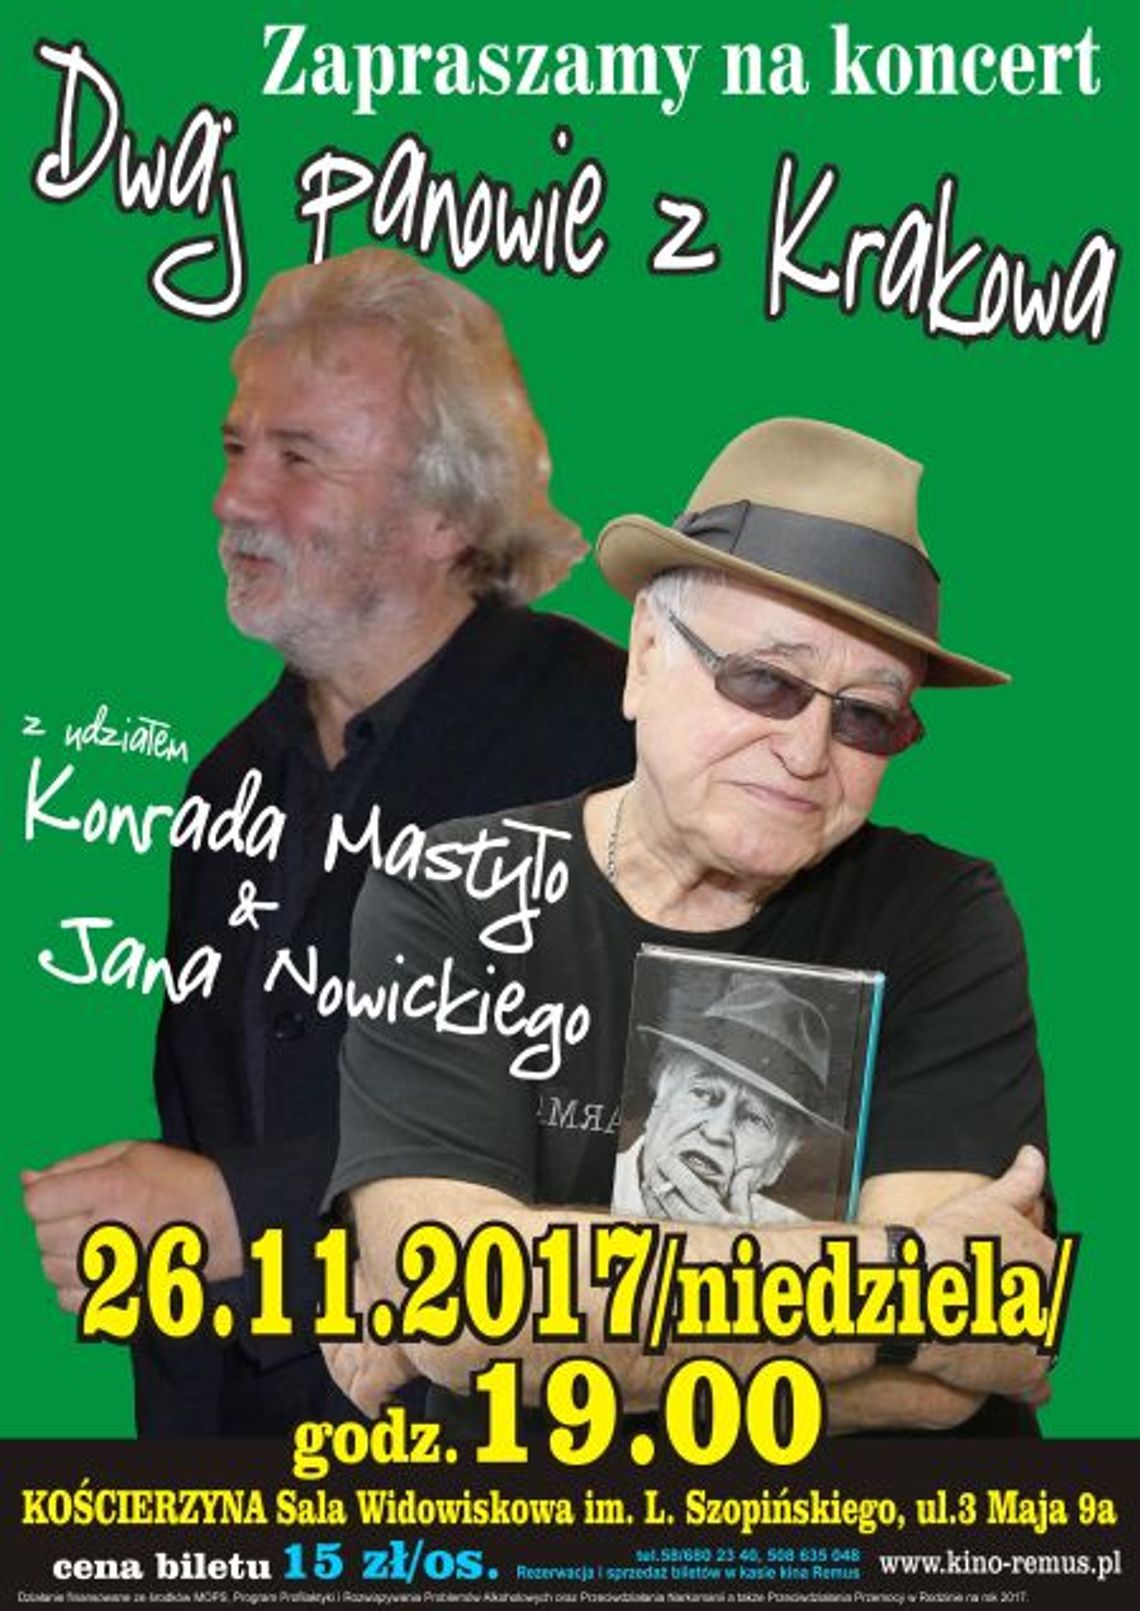 Koncert, pt. "Dwaj Panowie z Krakowa"